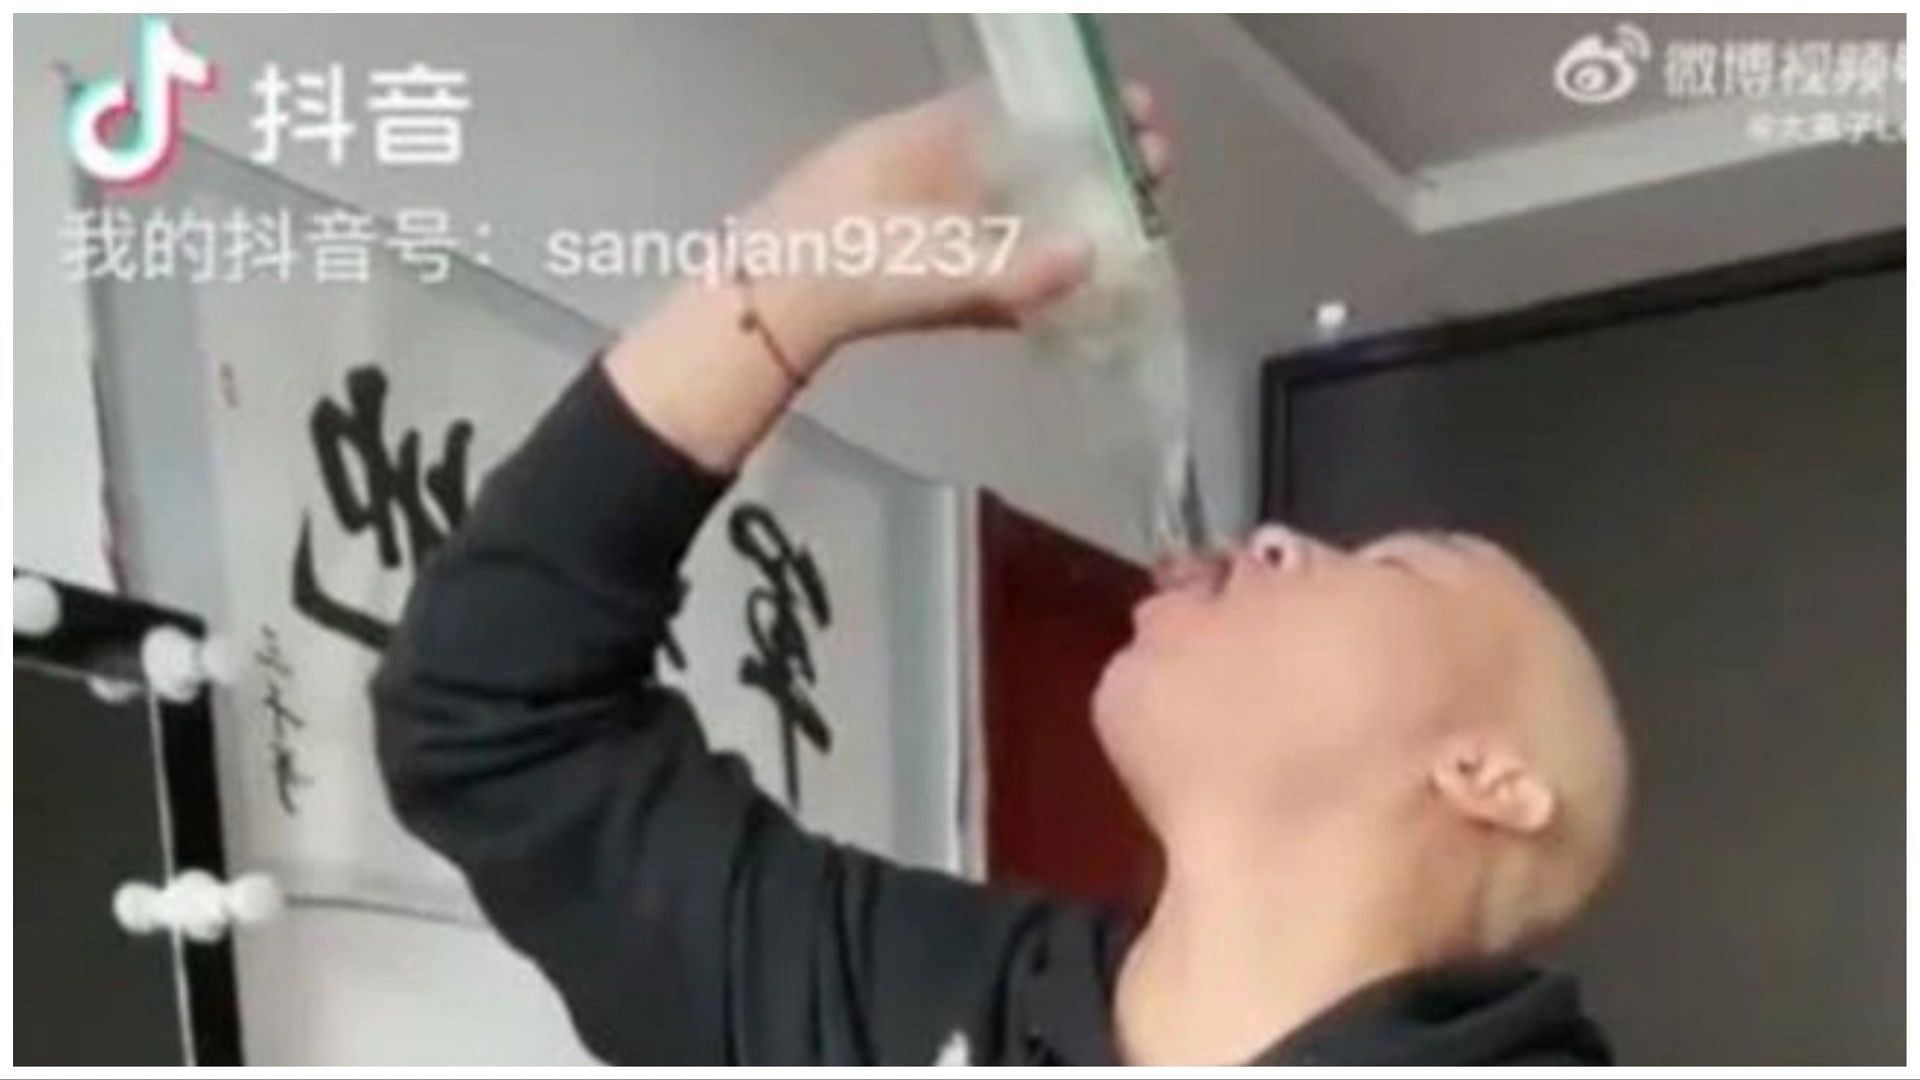 Chinese TikToker drank huge amount of alcohol. (Image via Douyin)